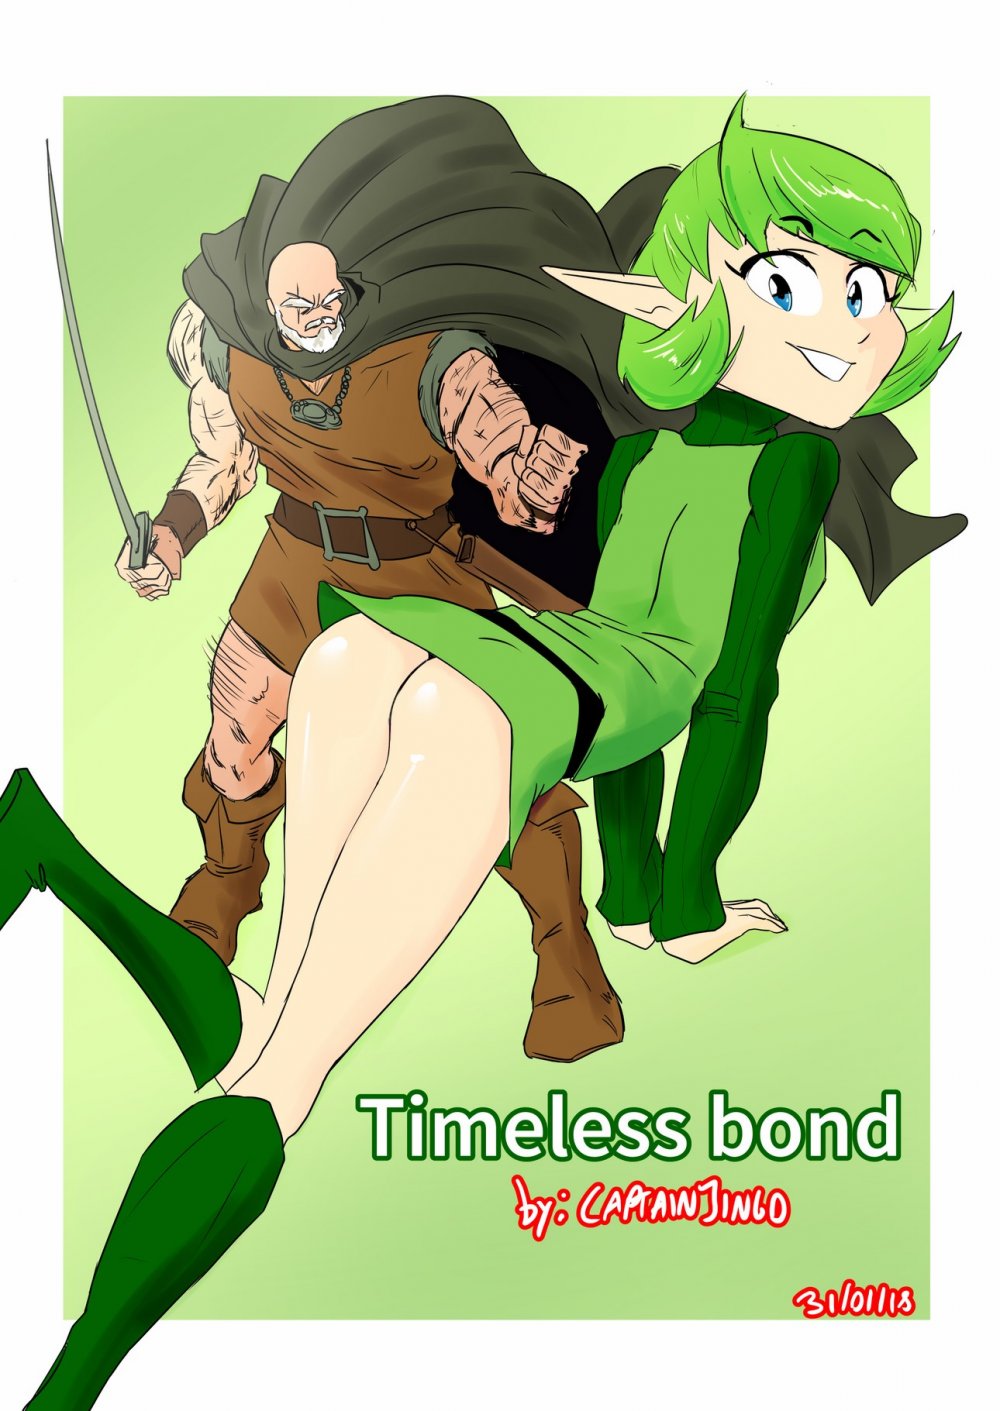 Timeless bond